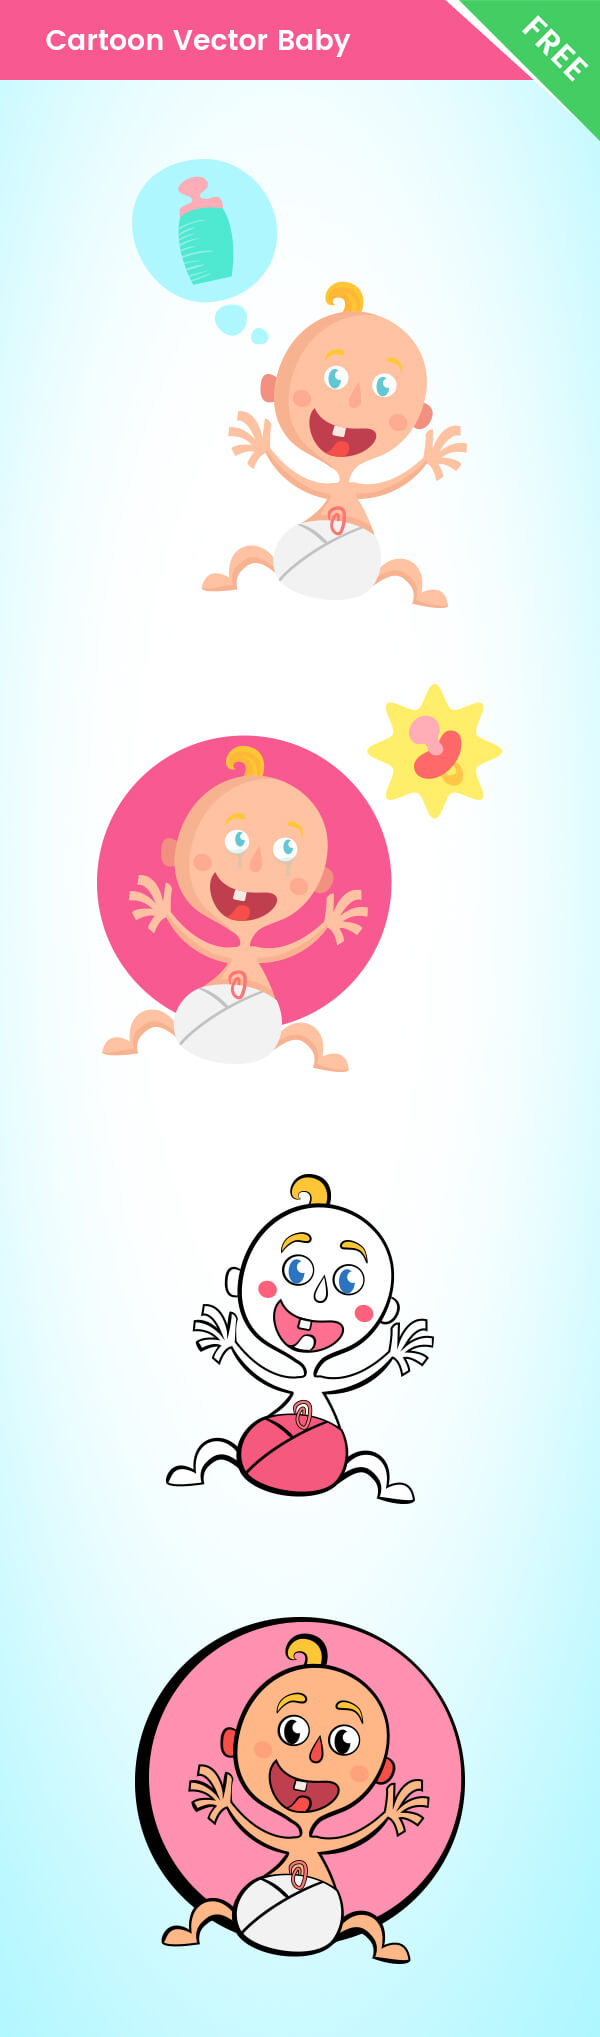 Vector Baby Cartoon Characters